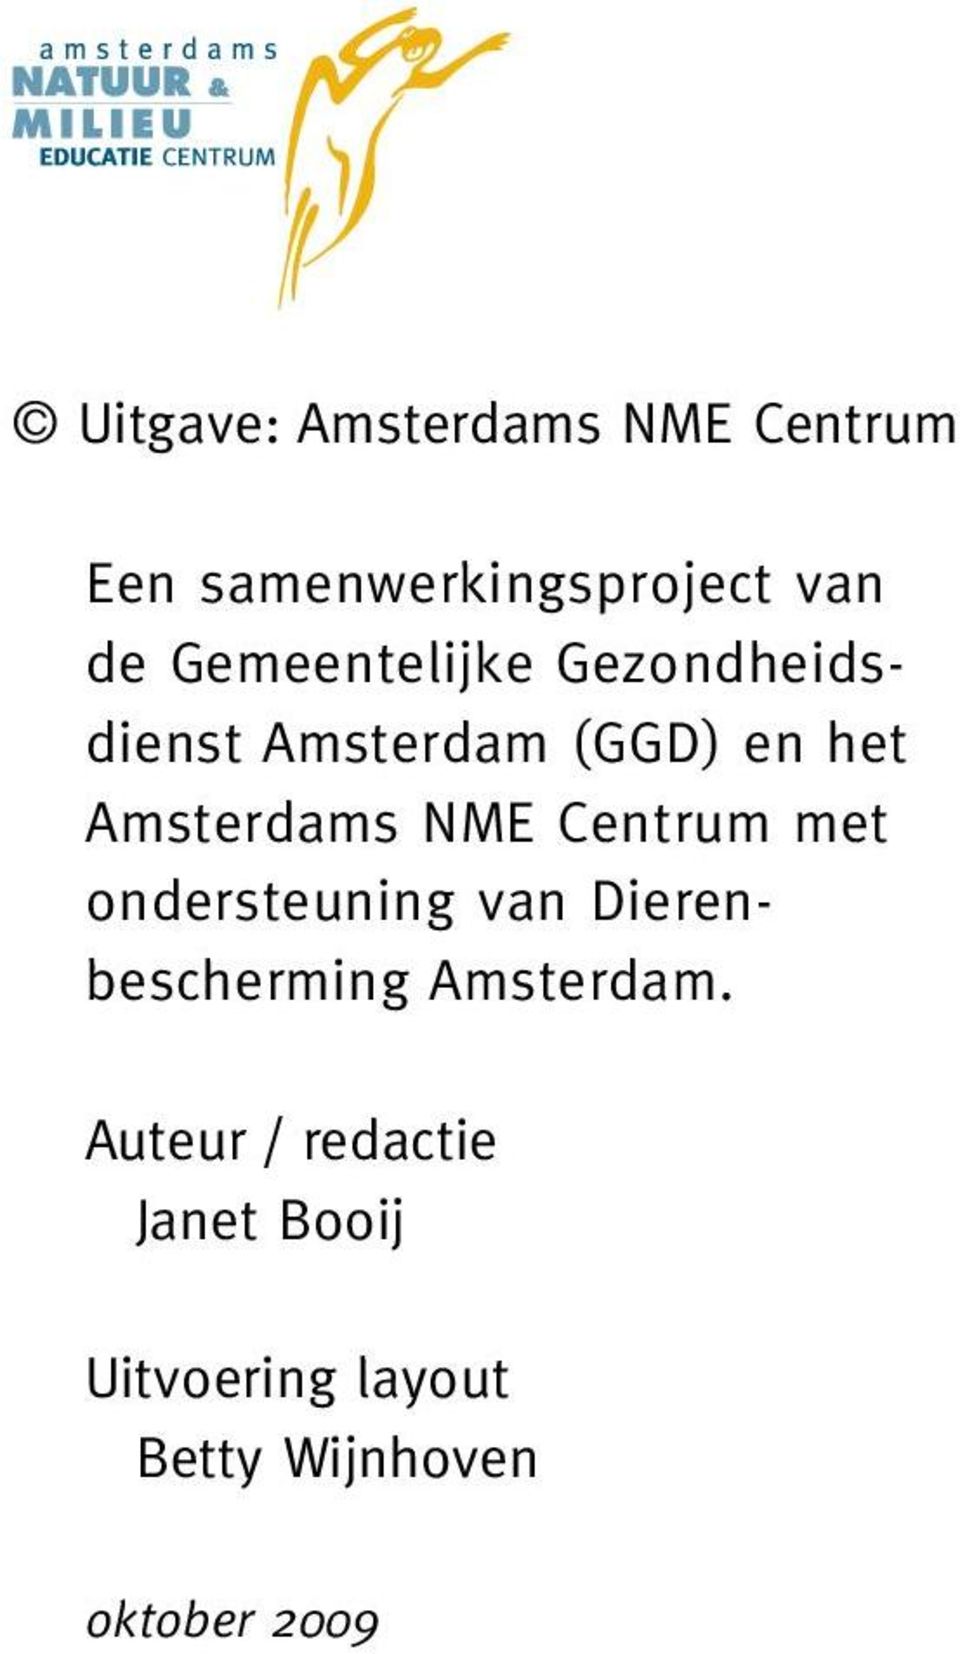 NME Centrum met ondersteuning van Dierenbescherming Amsterdam.